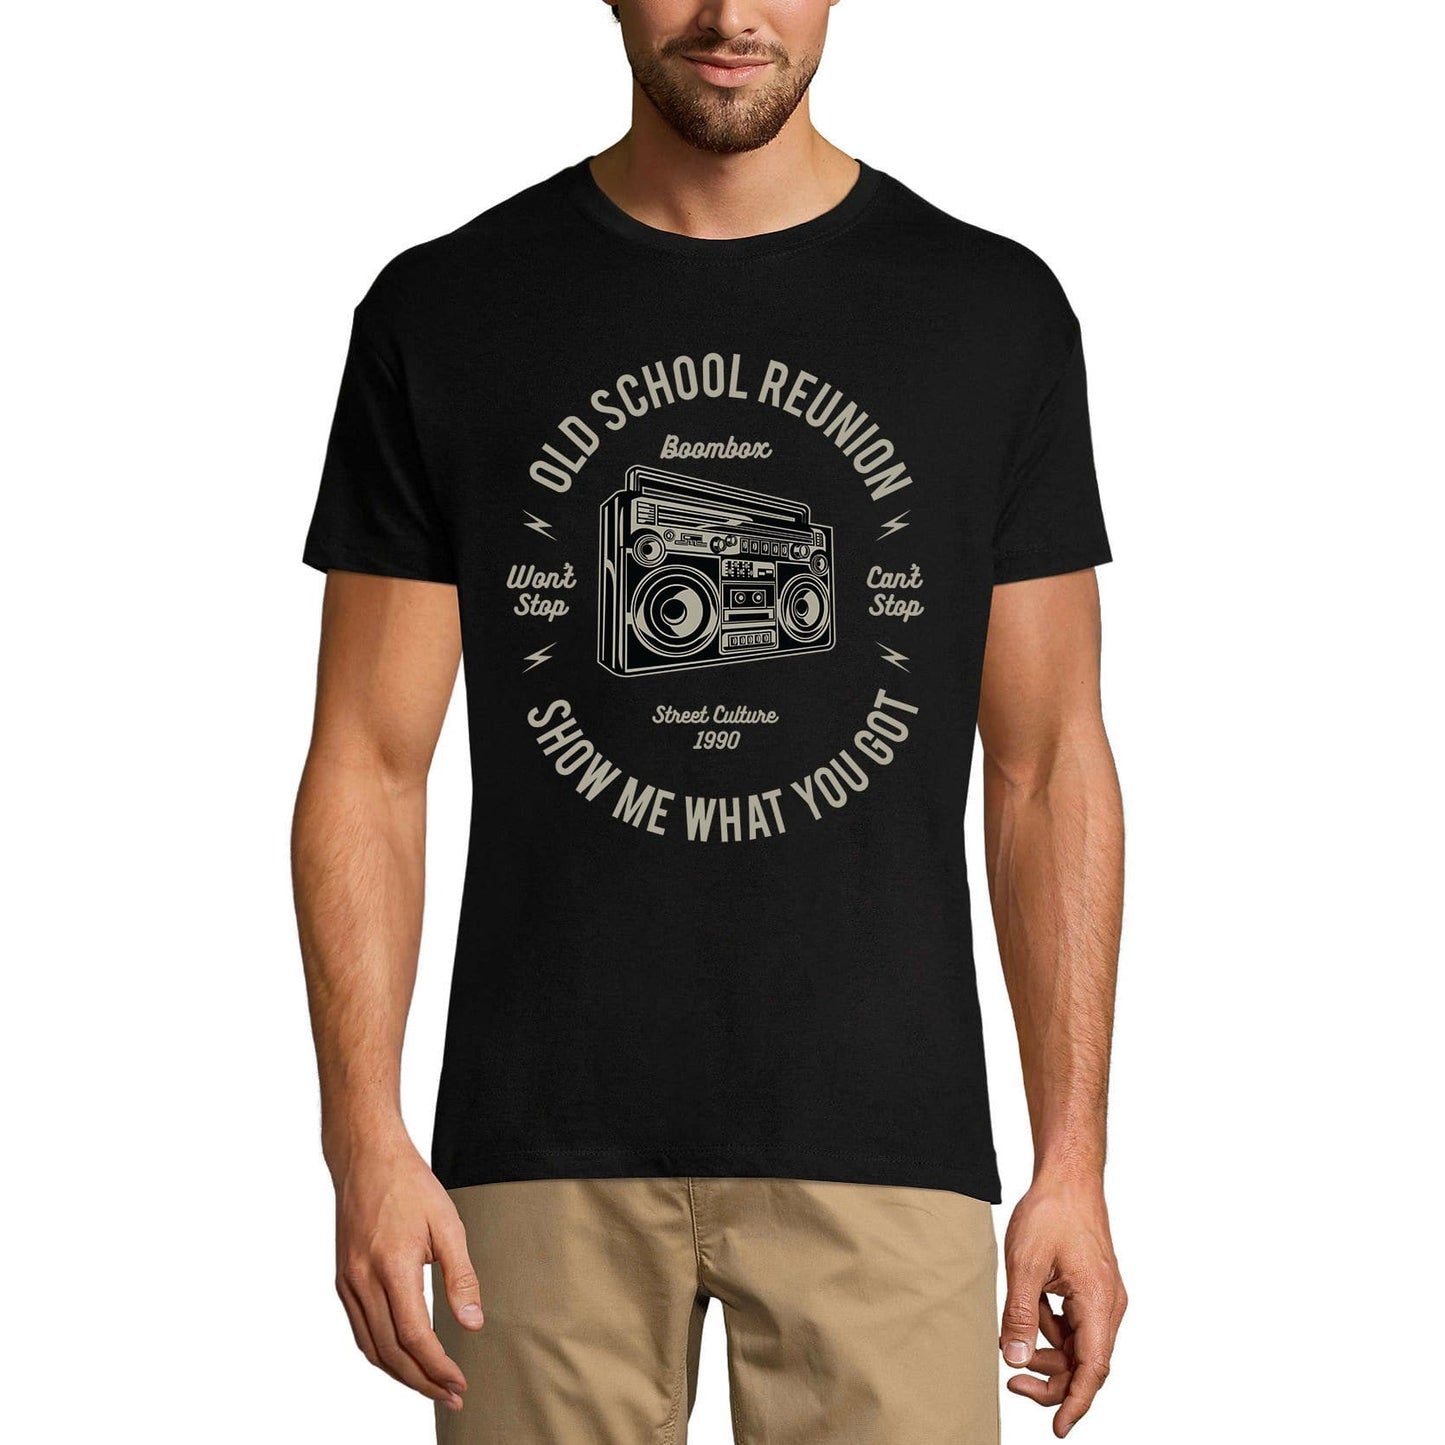 ULTRABASIC Herren-Musik-T-Shirt Boombox Old School Reunion – Vintage-Shirt für Männer